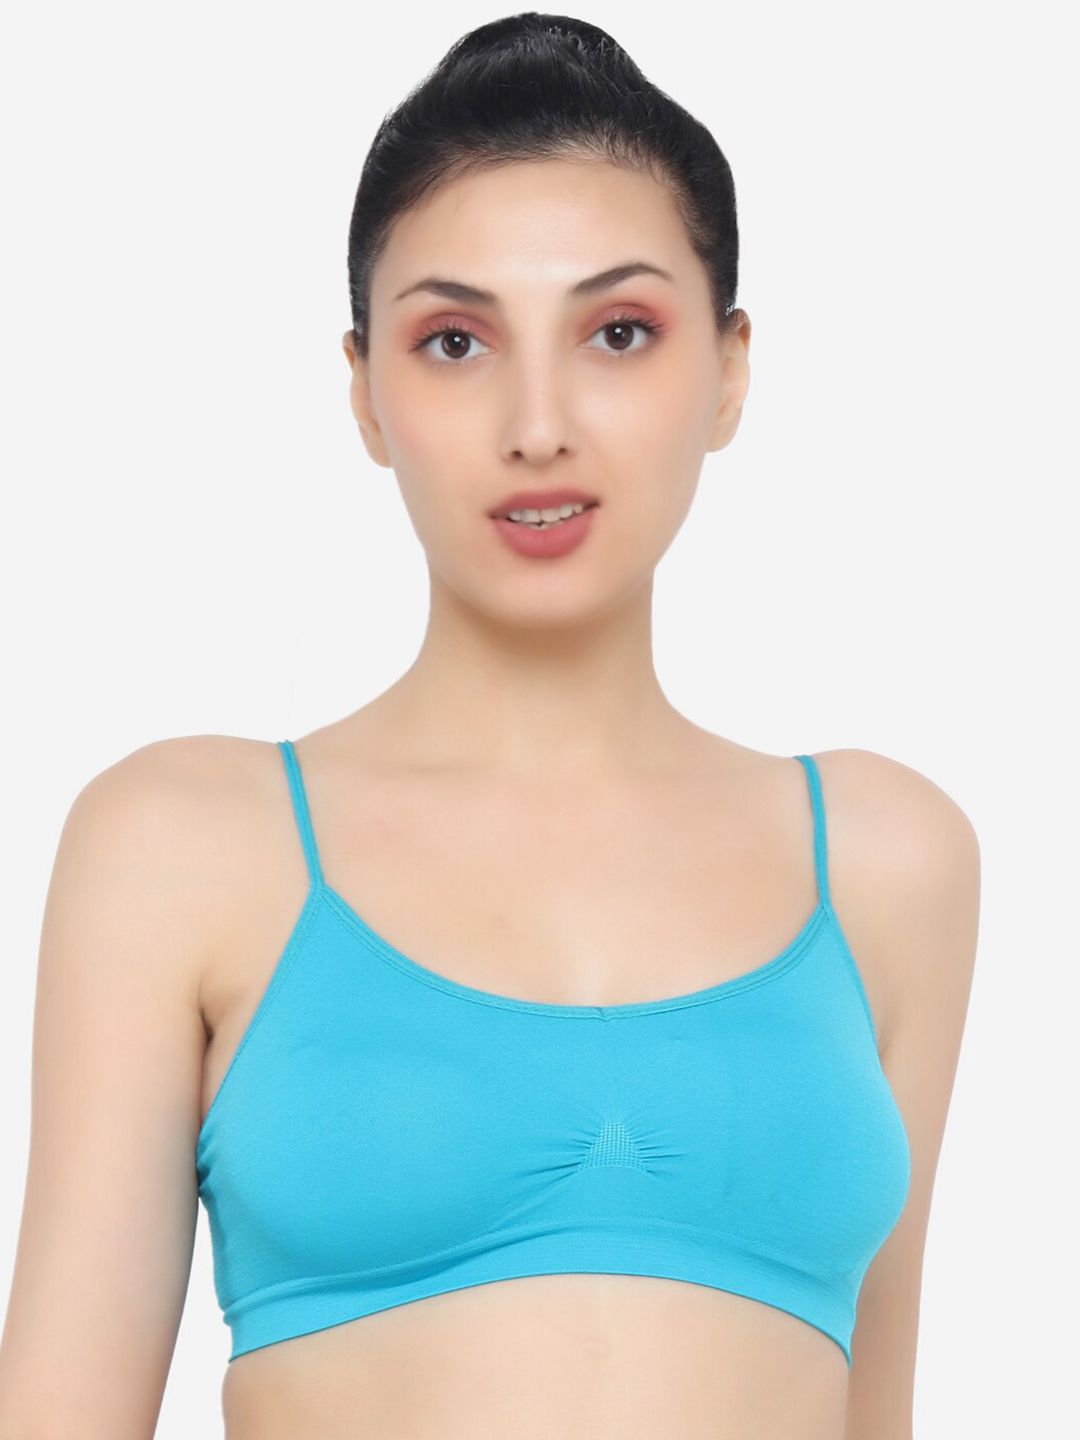 XOXO Design Turquoise Blue Non-Padded Sports Bra Price in India